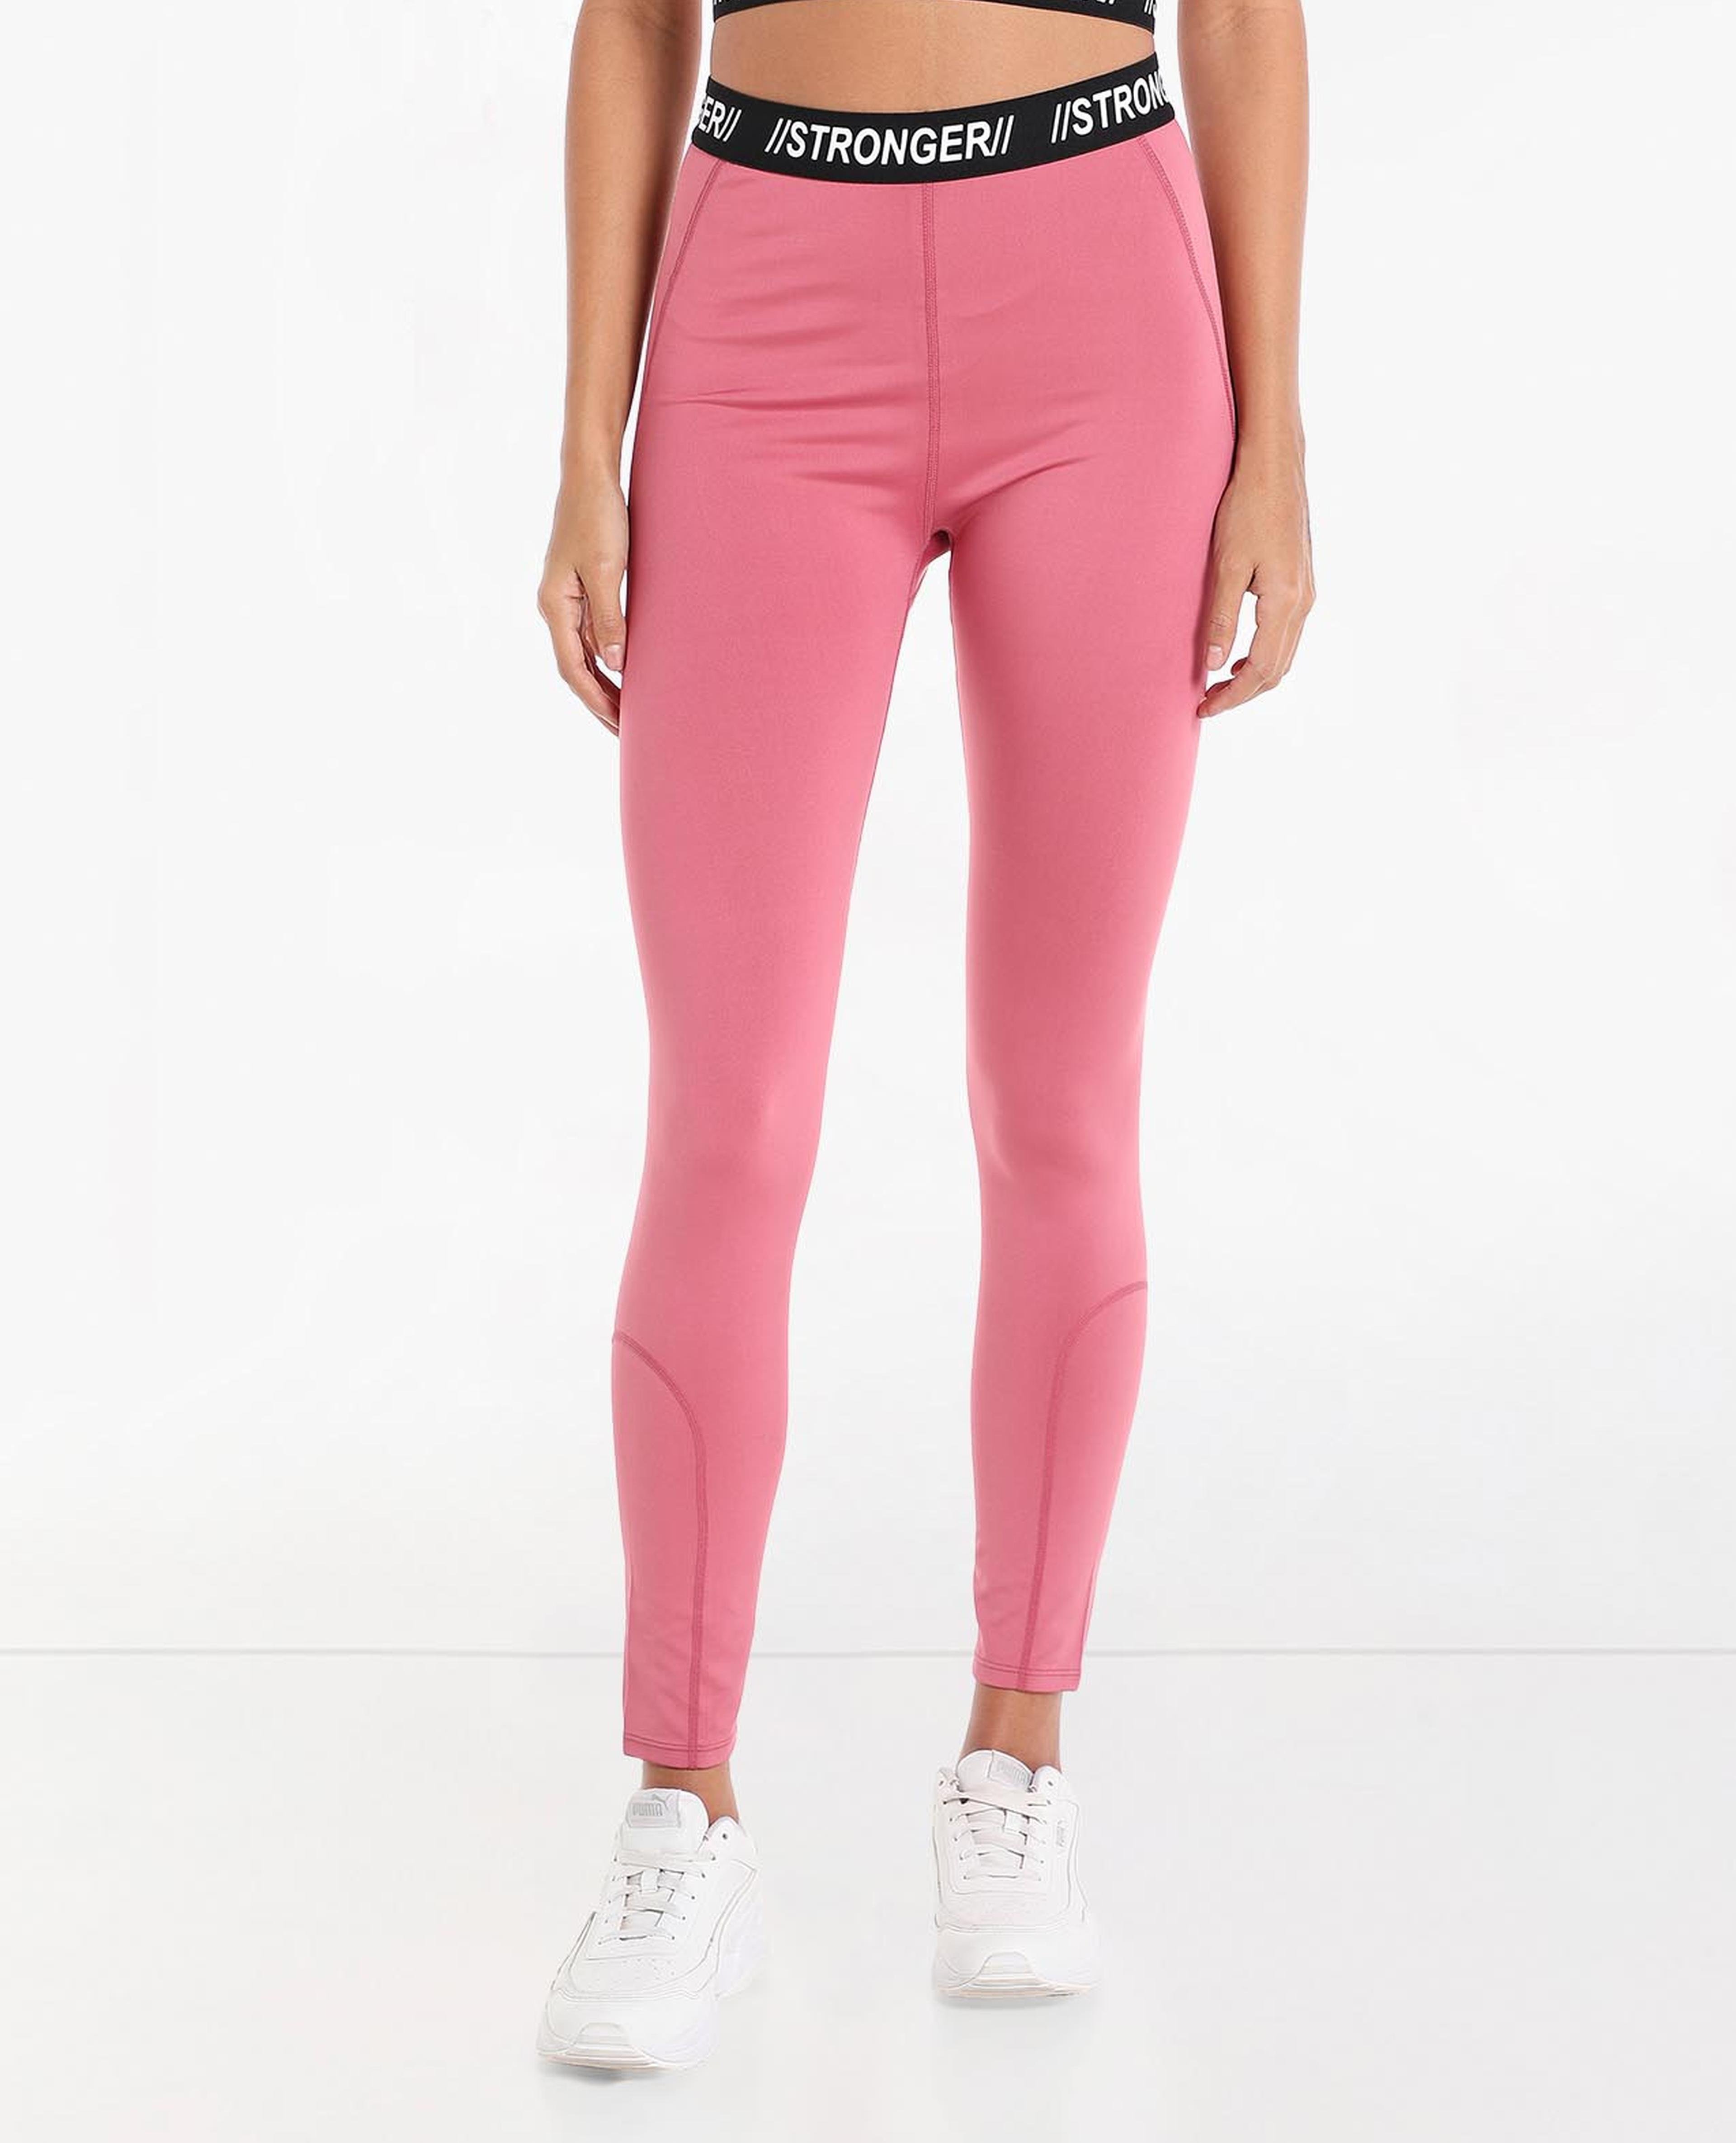 Buy Pink Cotton High-Waist Leggings online in Dubai